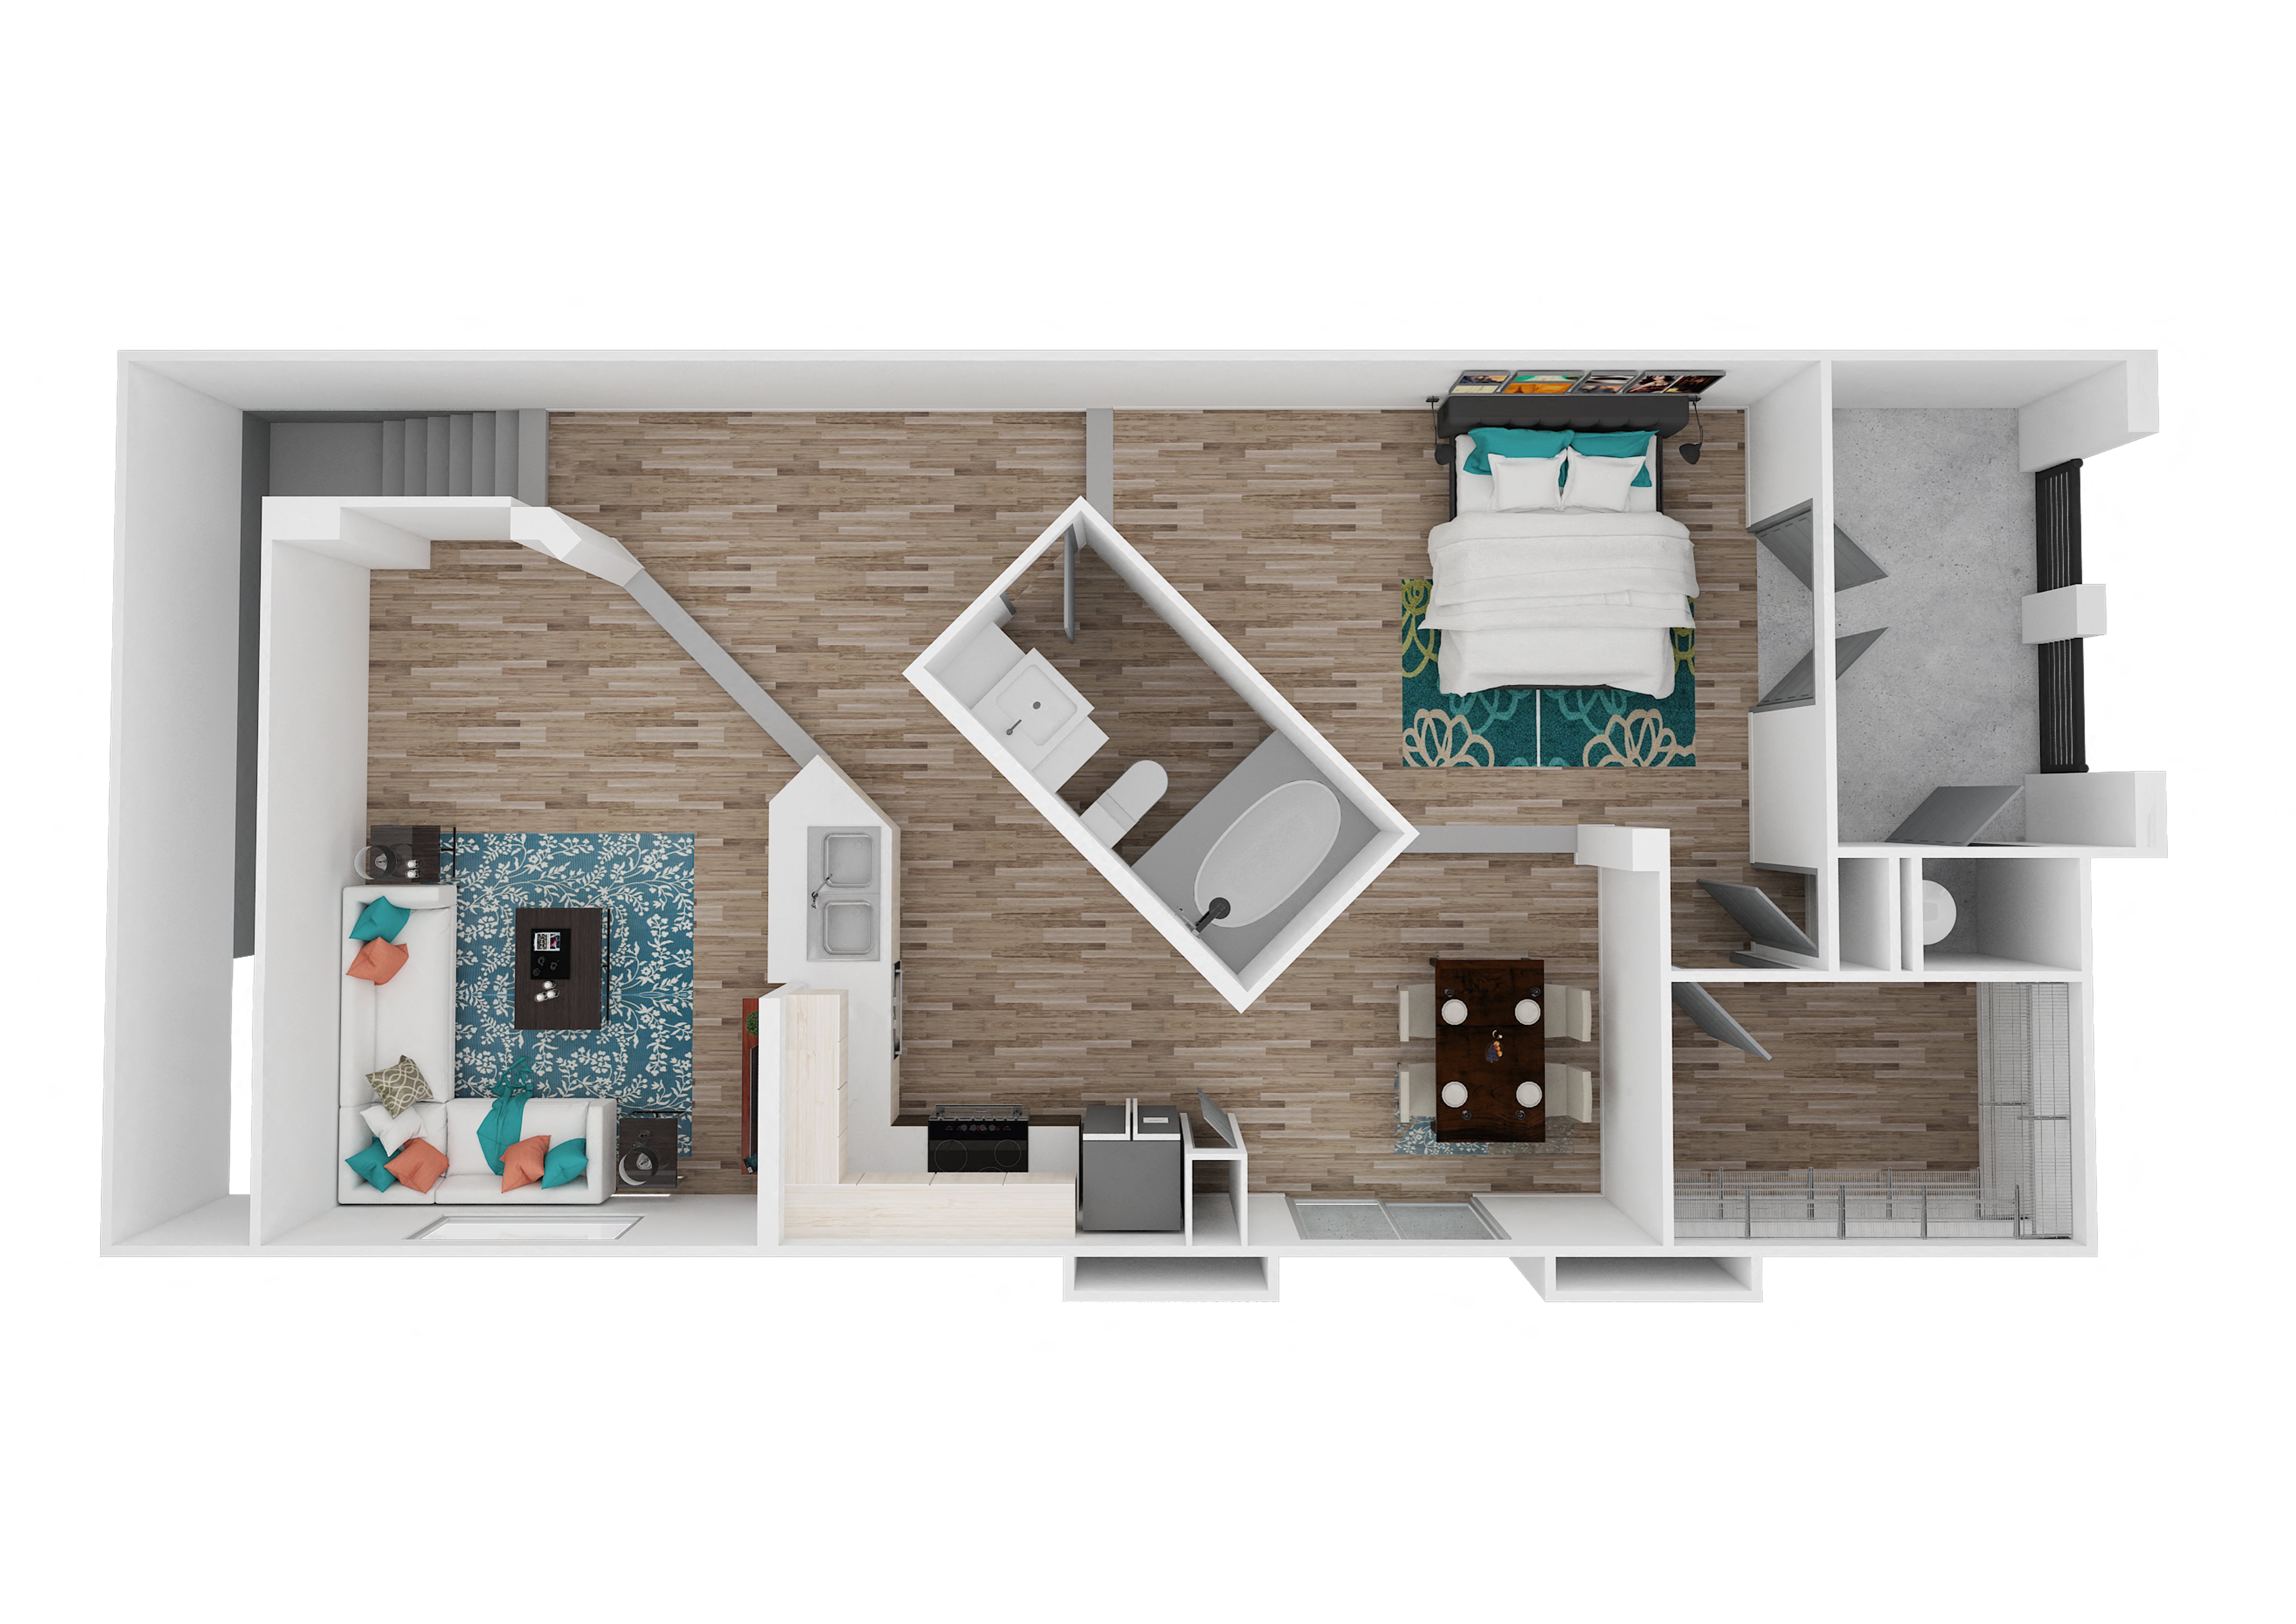 Floor Plans of Zone Luxe Apartments in Glendale, AZ